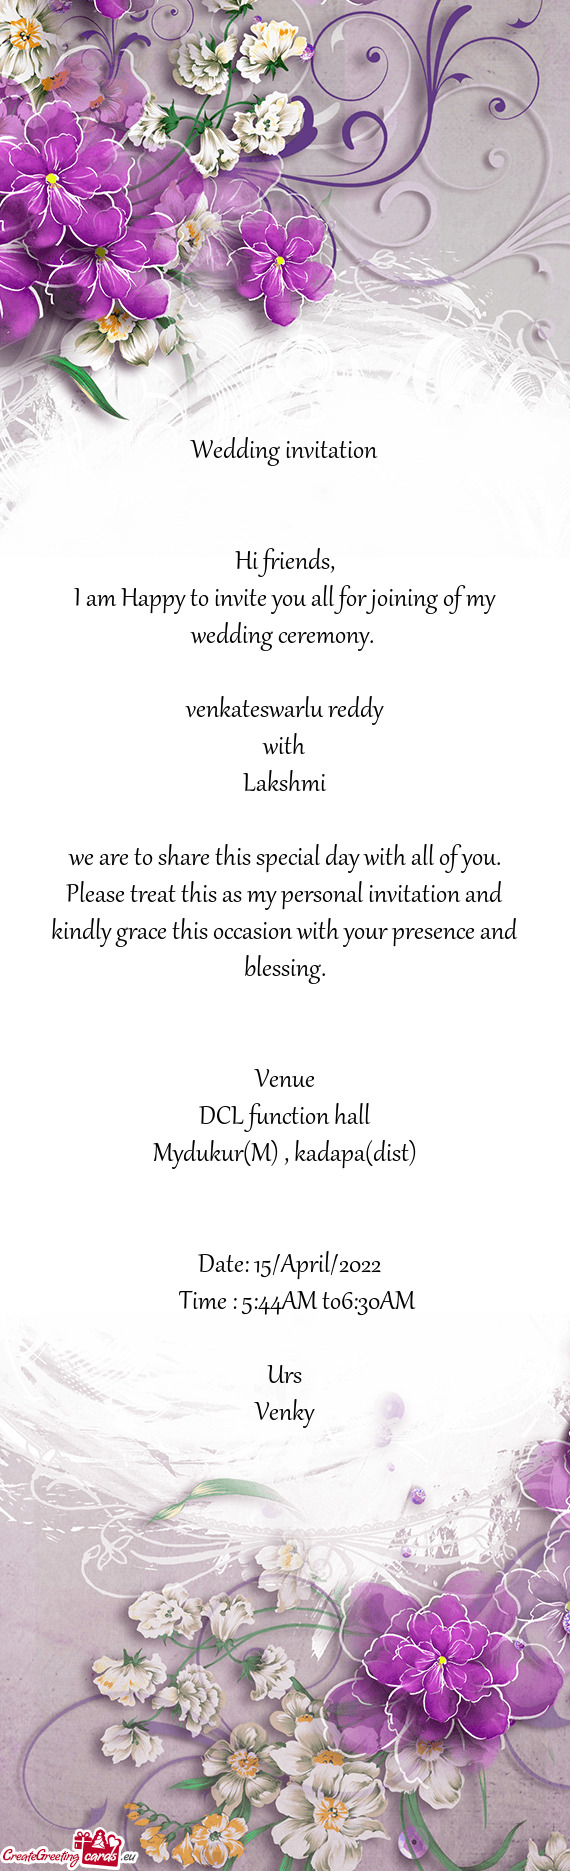 Wedding invitation
 
 
 Hi friends